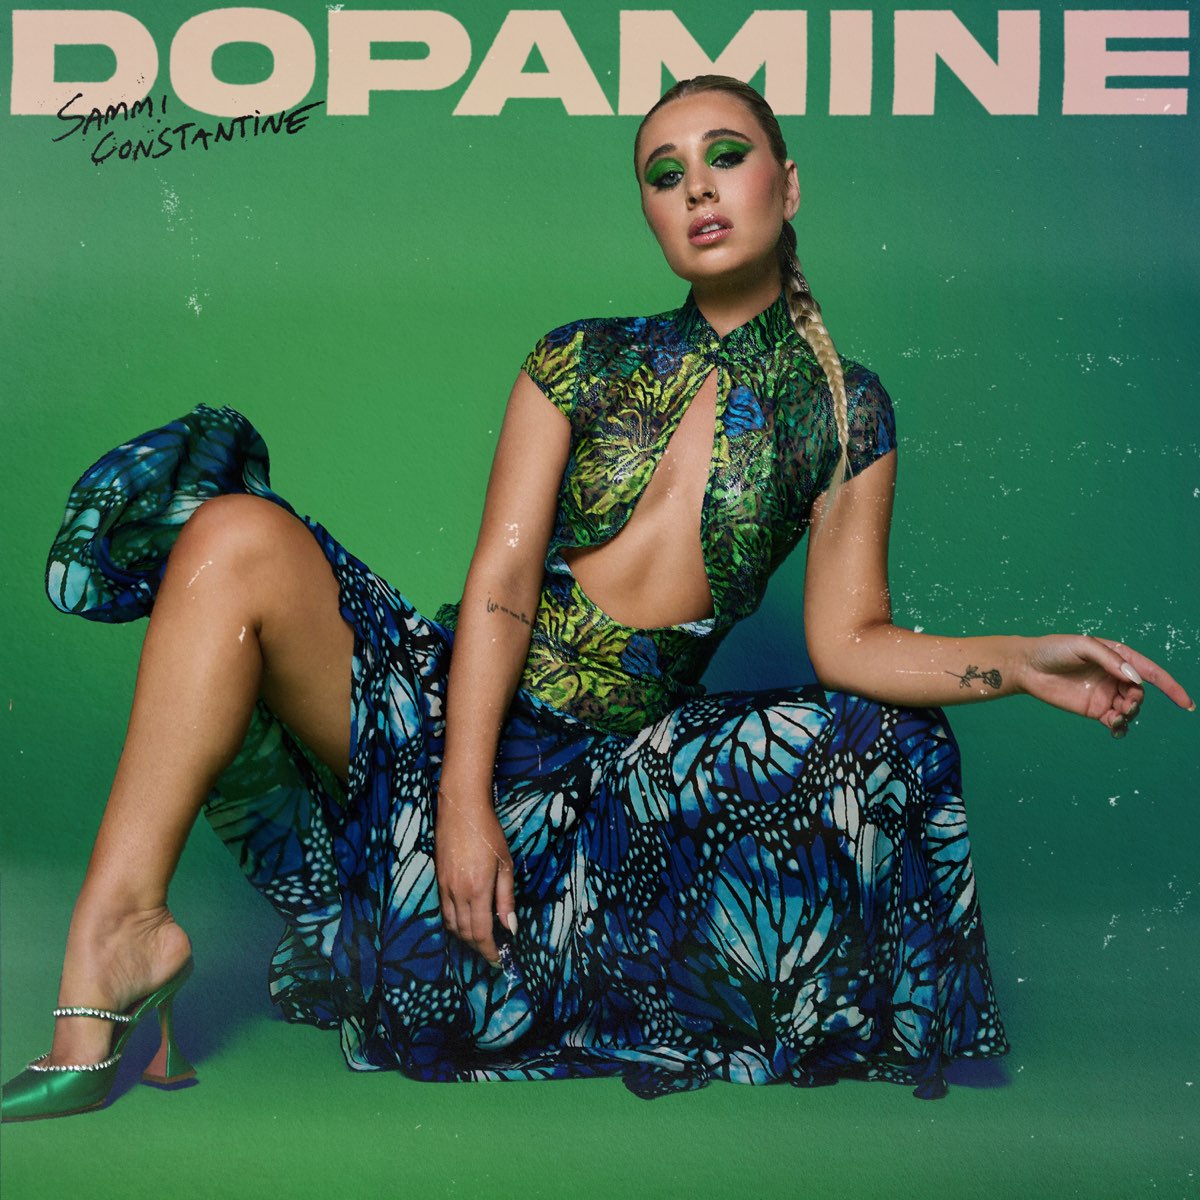 Sammi Constantine — Dopamine cover artwork